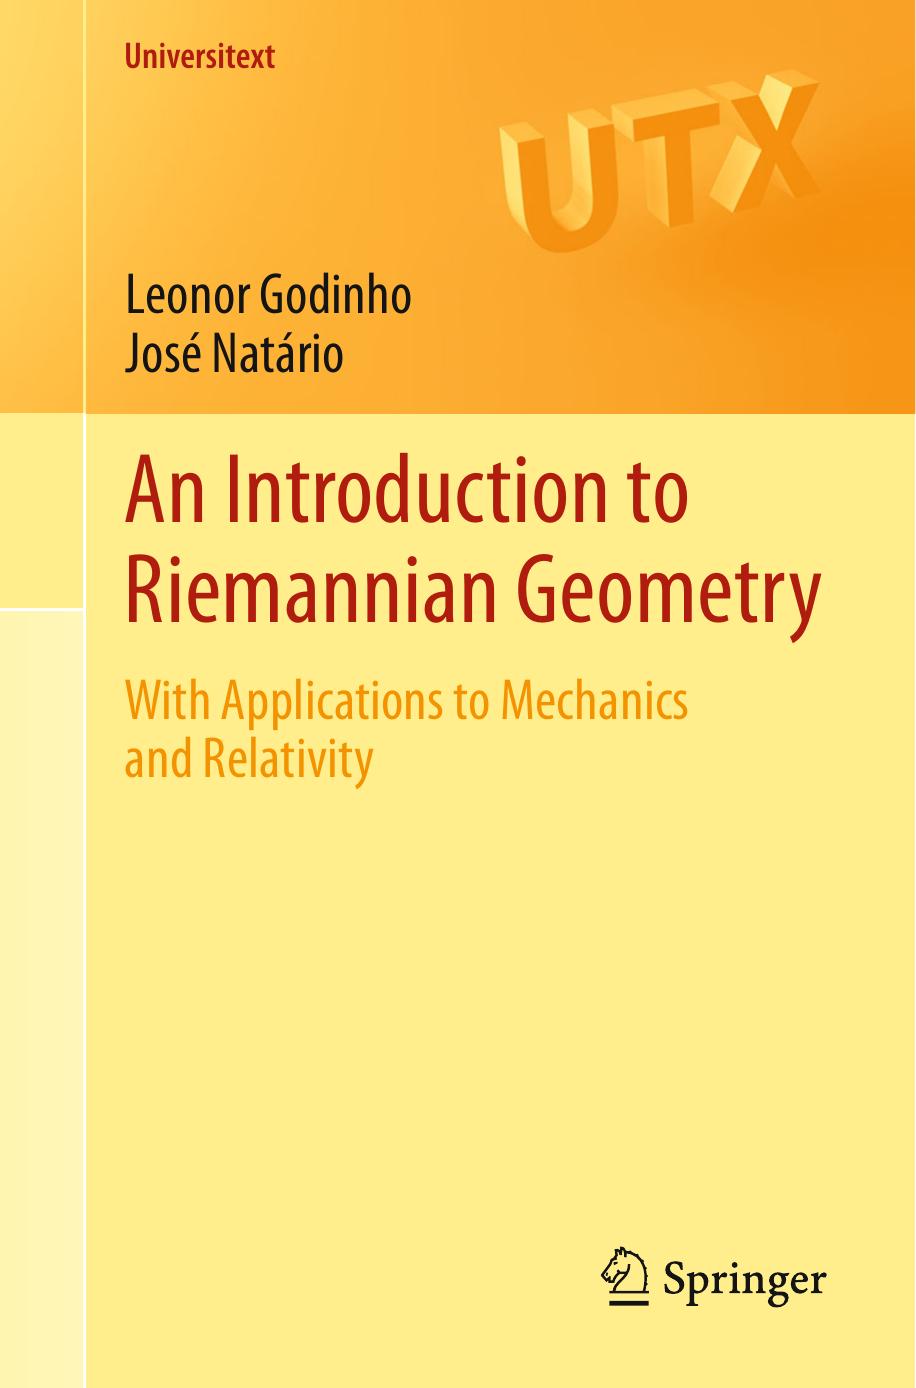 An Introduction to Riemannian Geometry by Leonor Godinho & José Natário